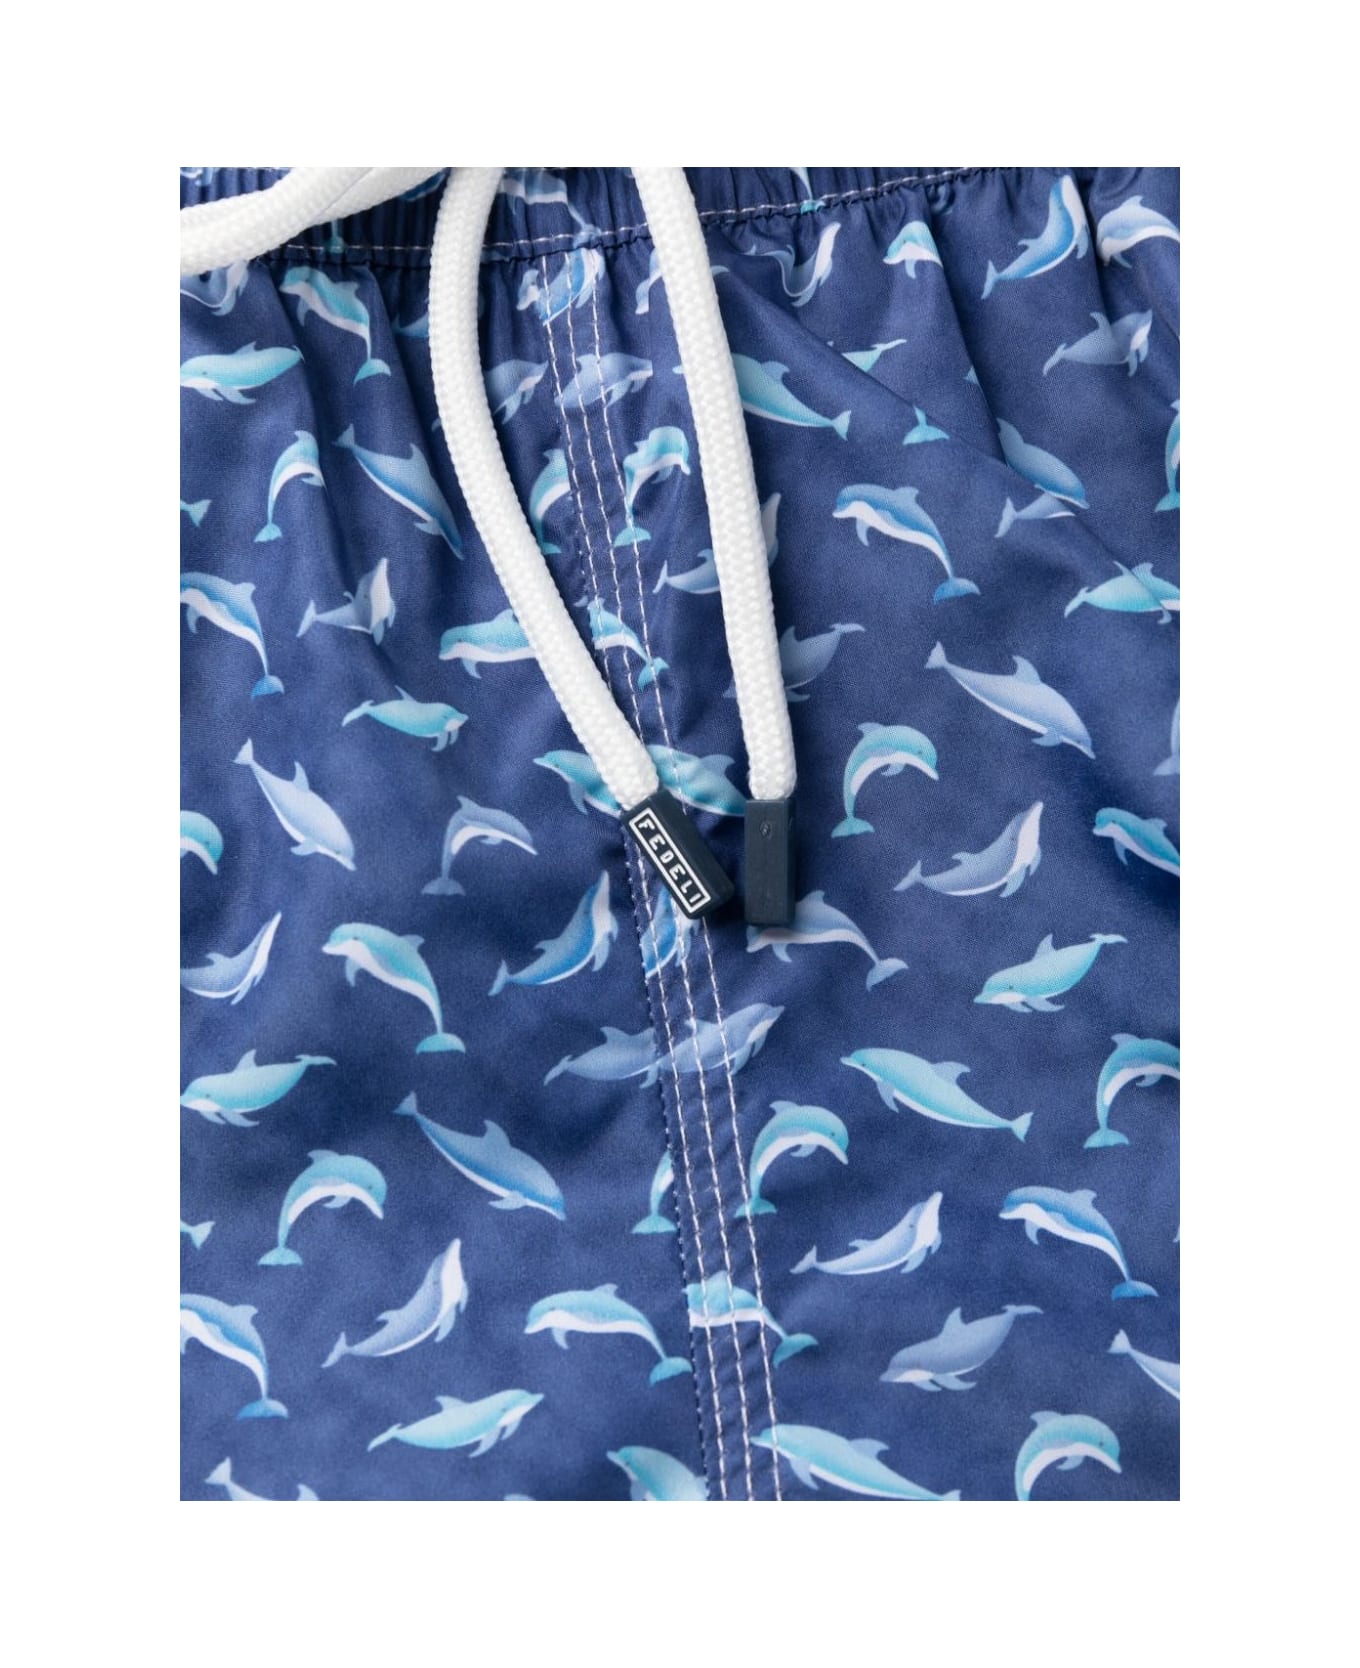 Fedeli Blue Swim Shorts With Light Blue Dolphin Pattern - Blue